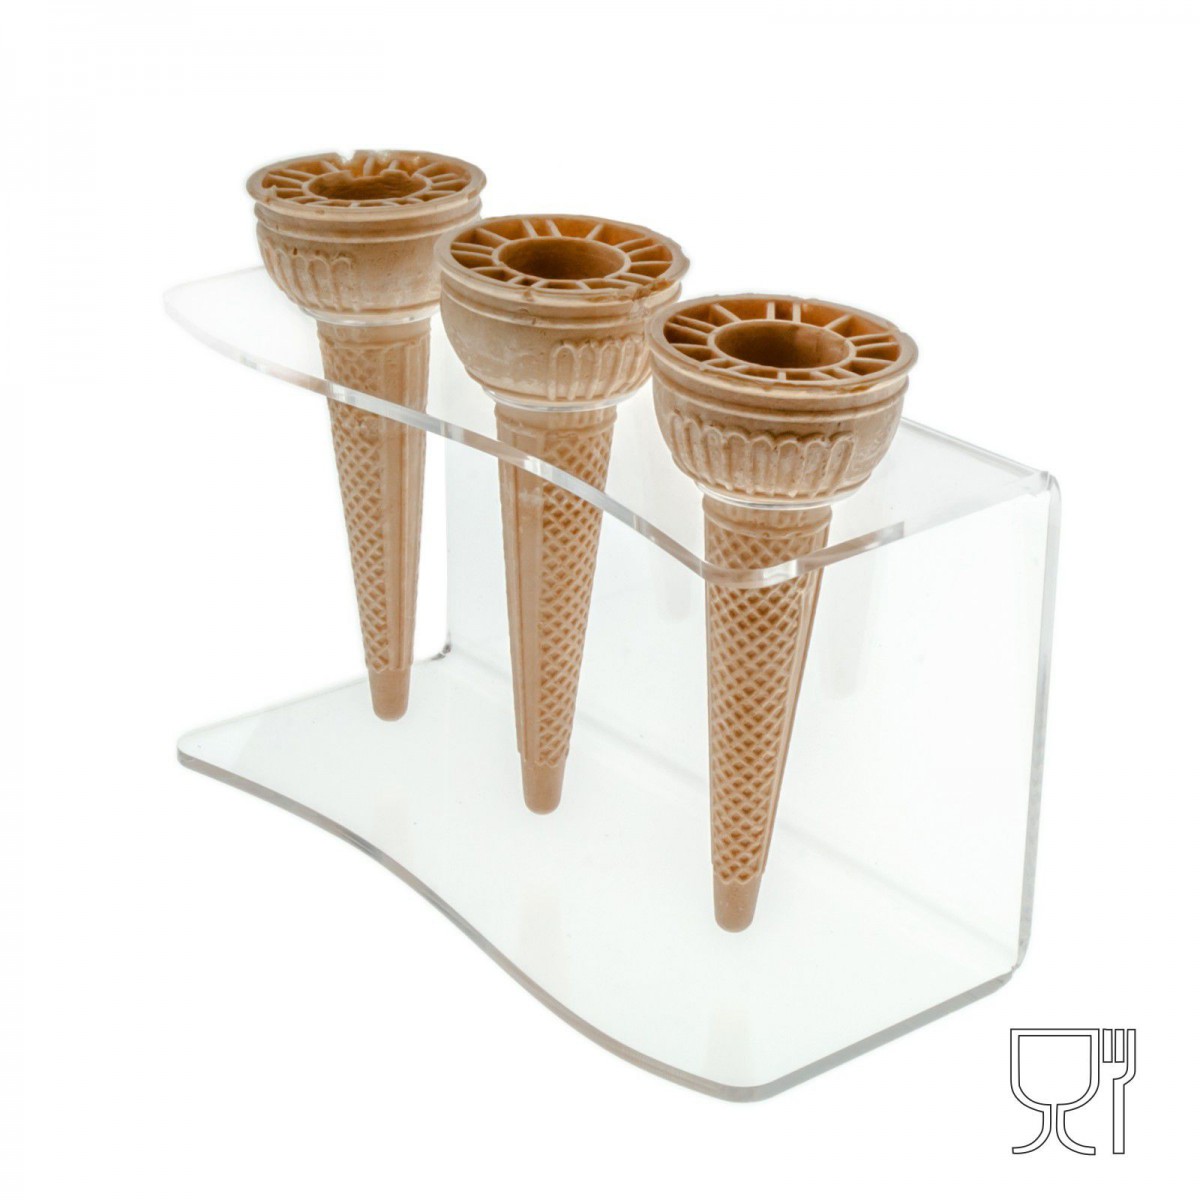 Clear Acrylic countertop ice-cream cone holder